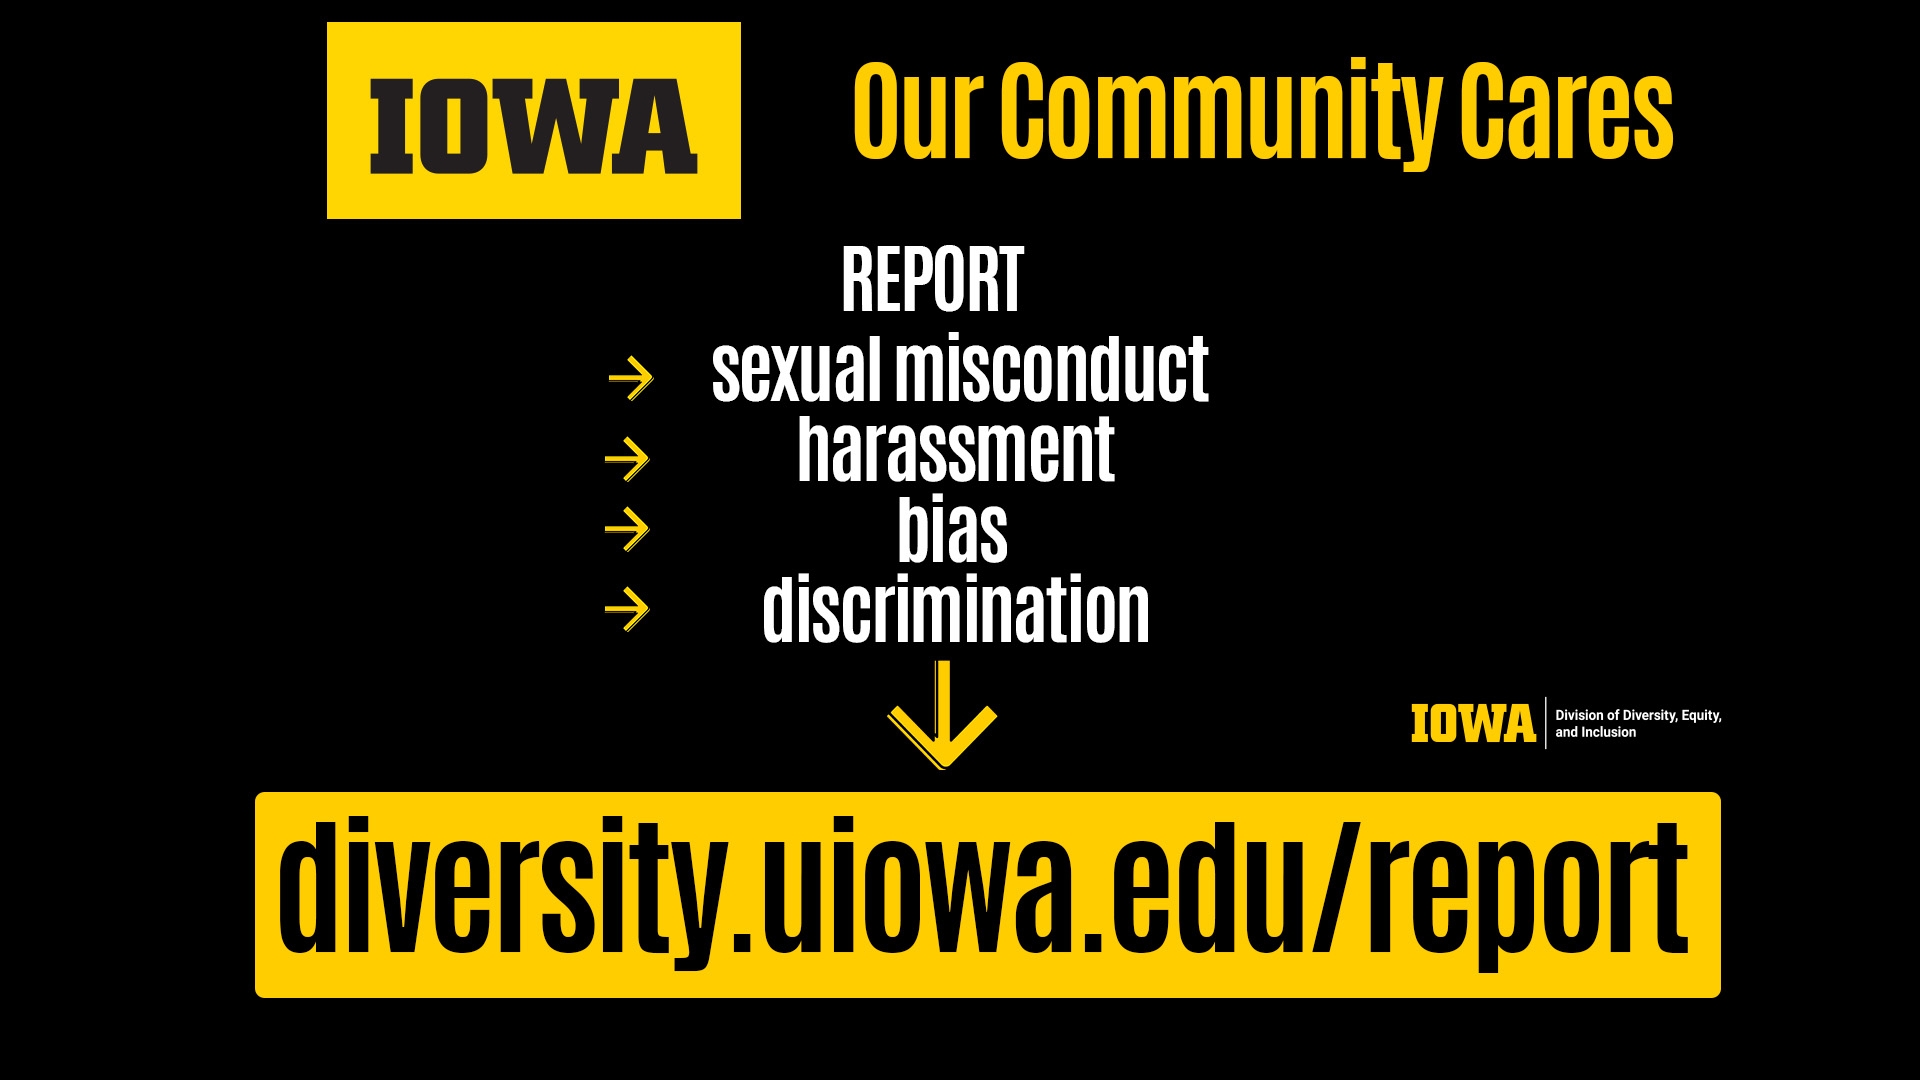 Iowa our community cares. Report sexual misconduct harassment bias or discrimination at diversity.uiowa.edu/report